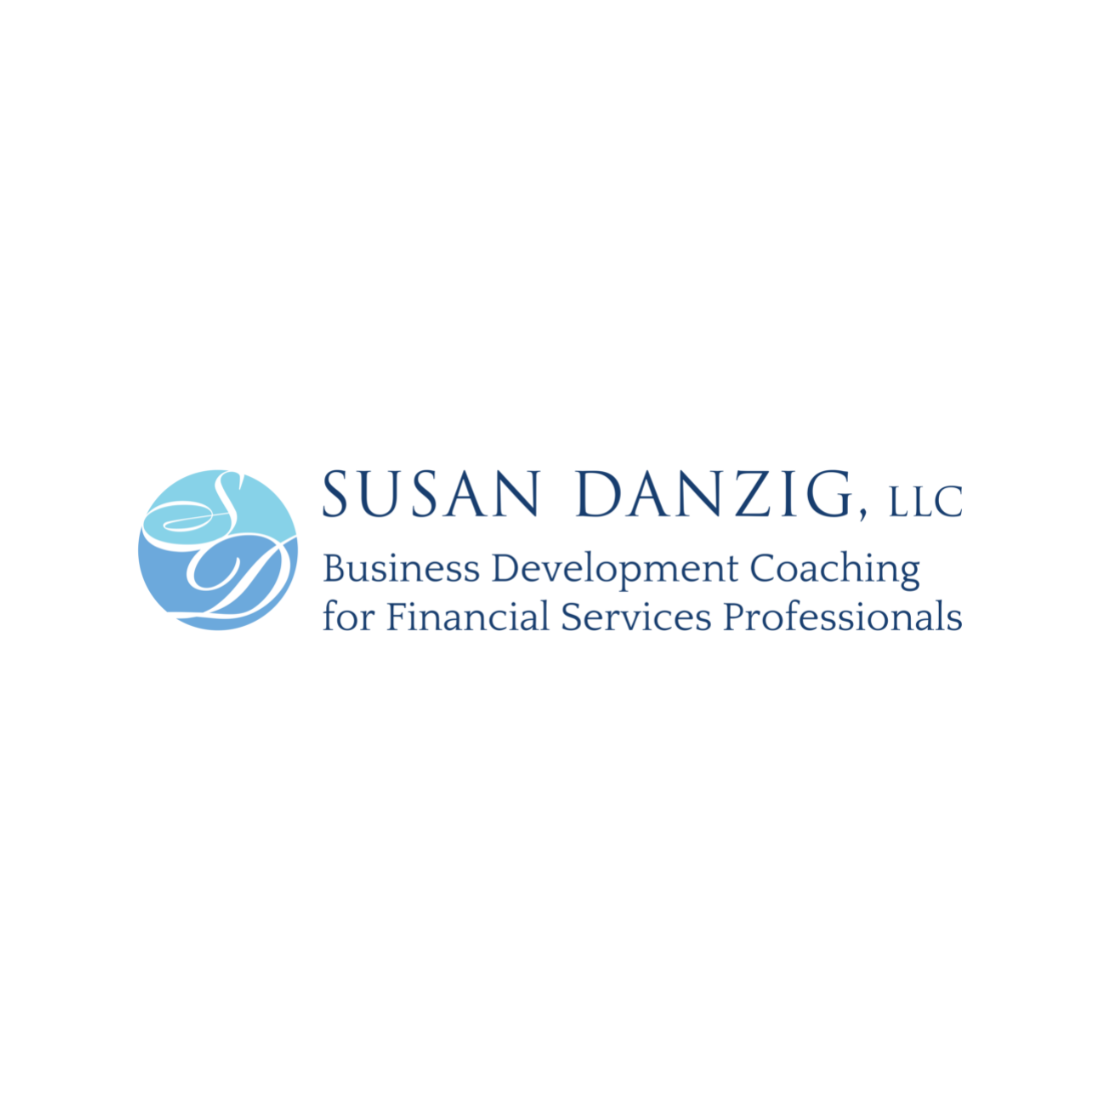 Susan Danzig, LLC